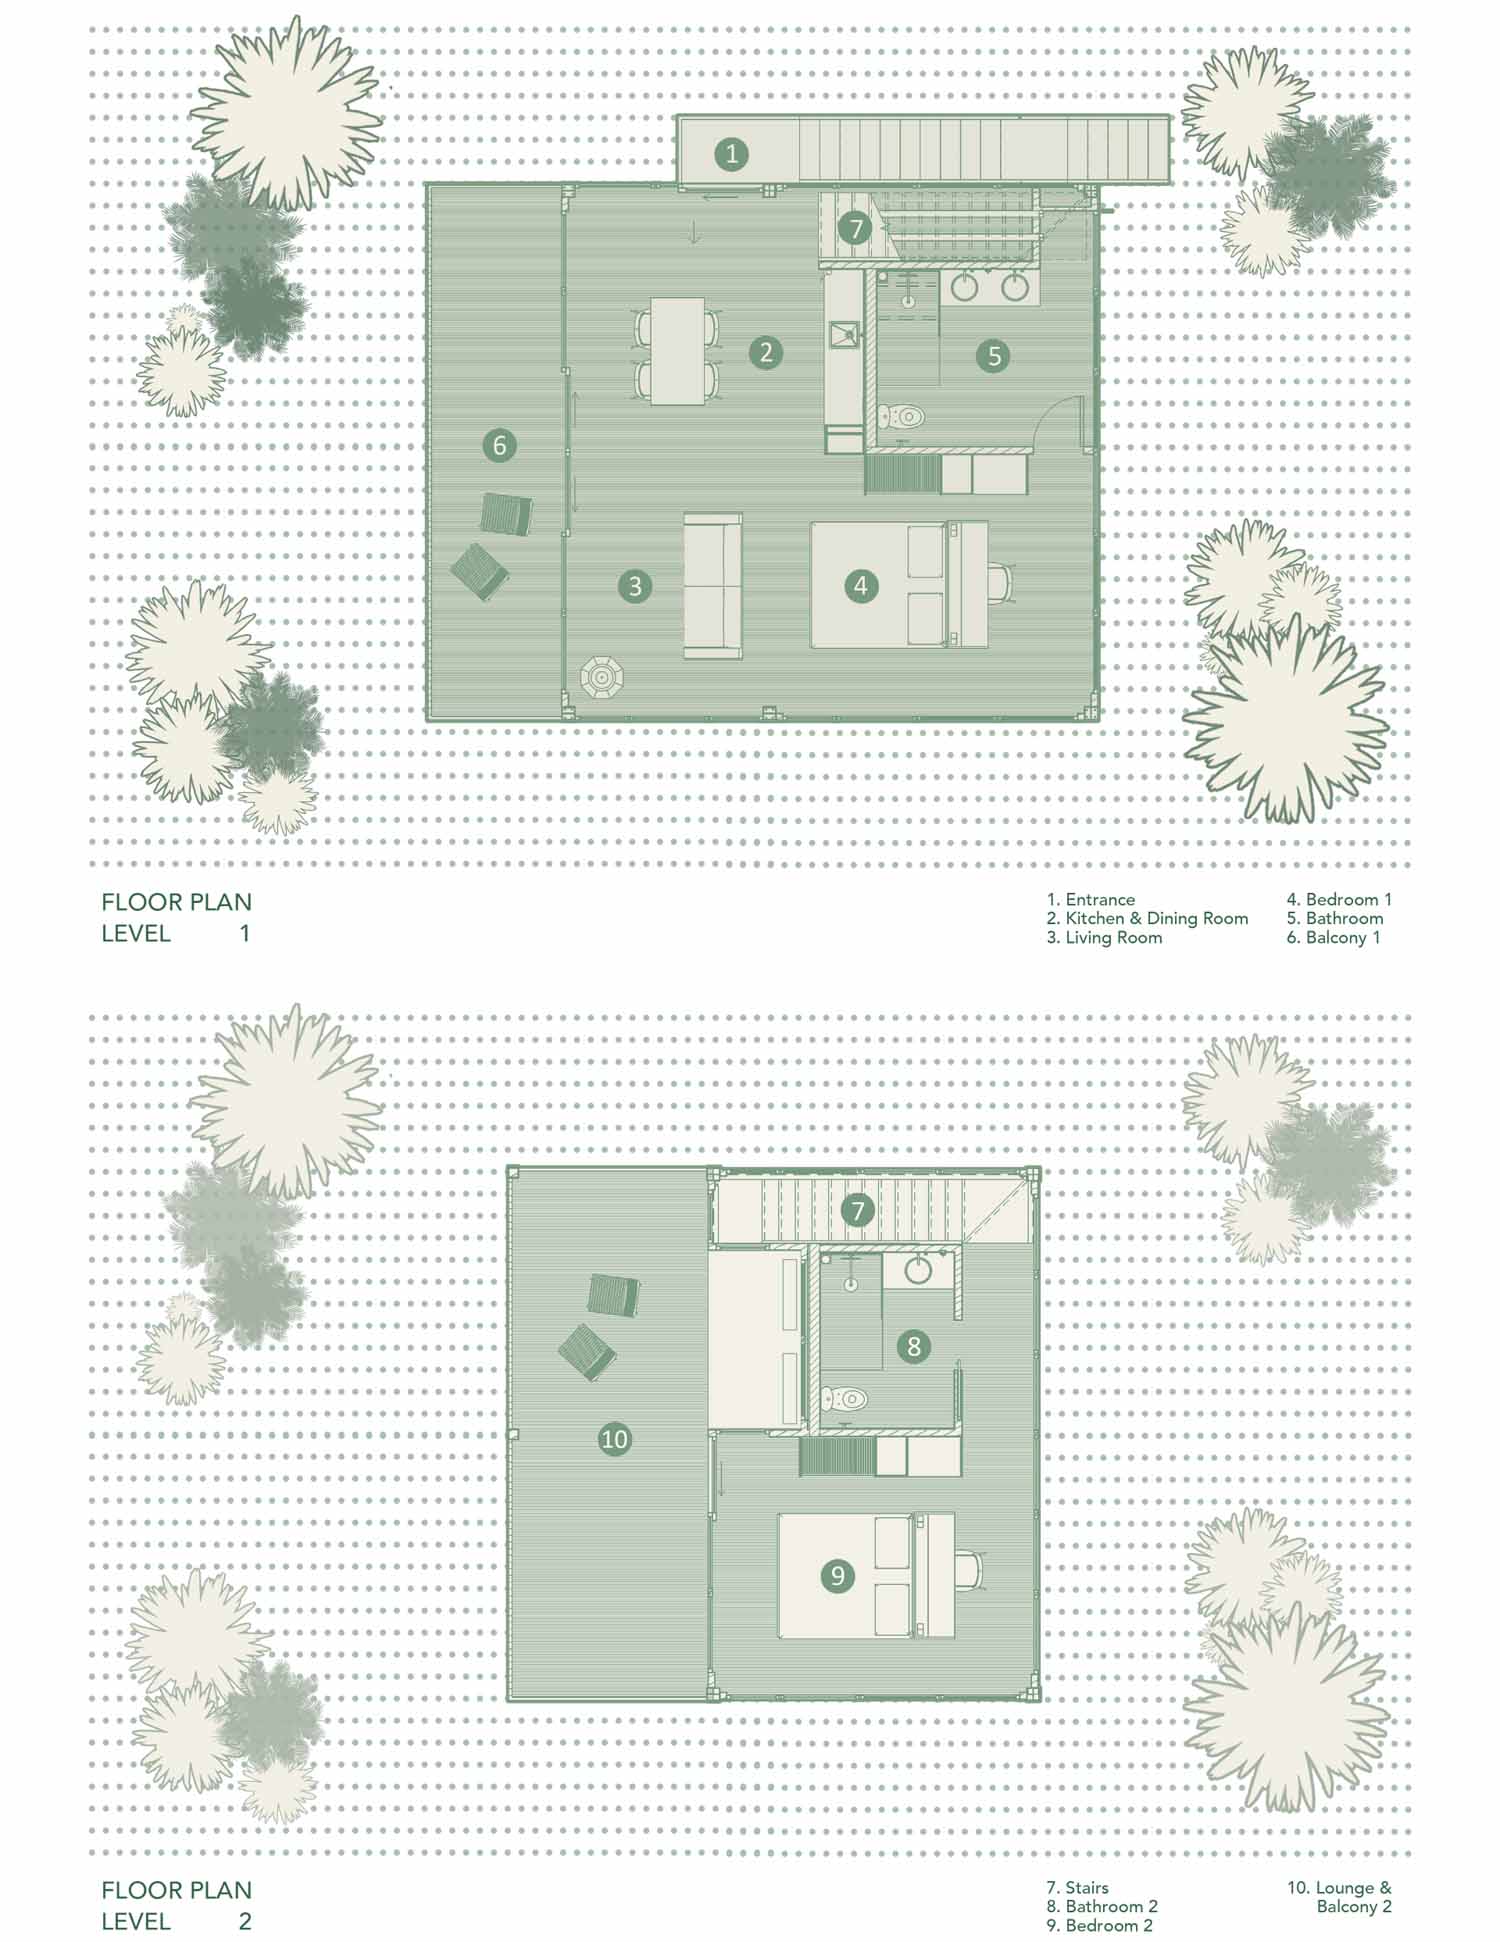 The floor plan of a modern two-bedroom villa.